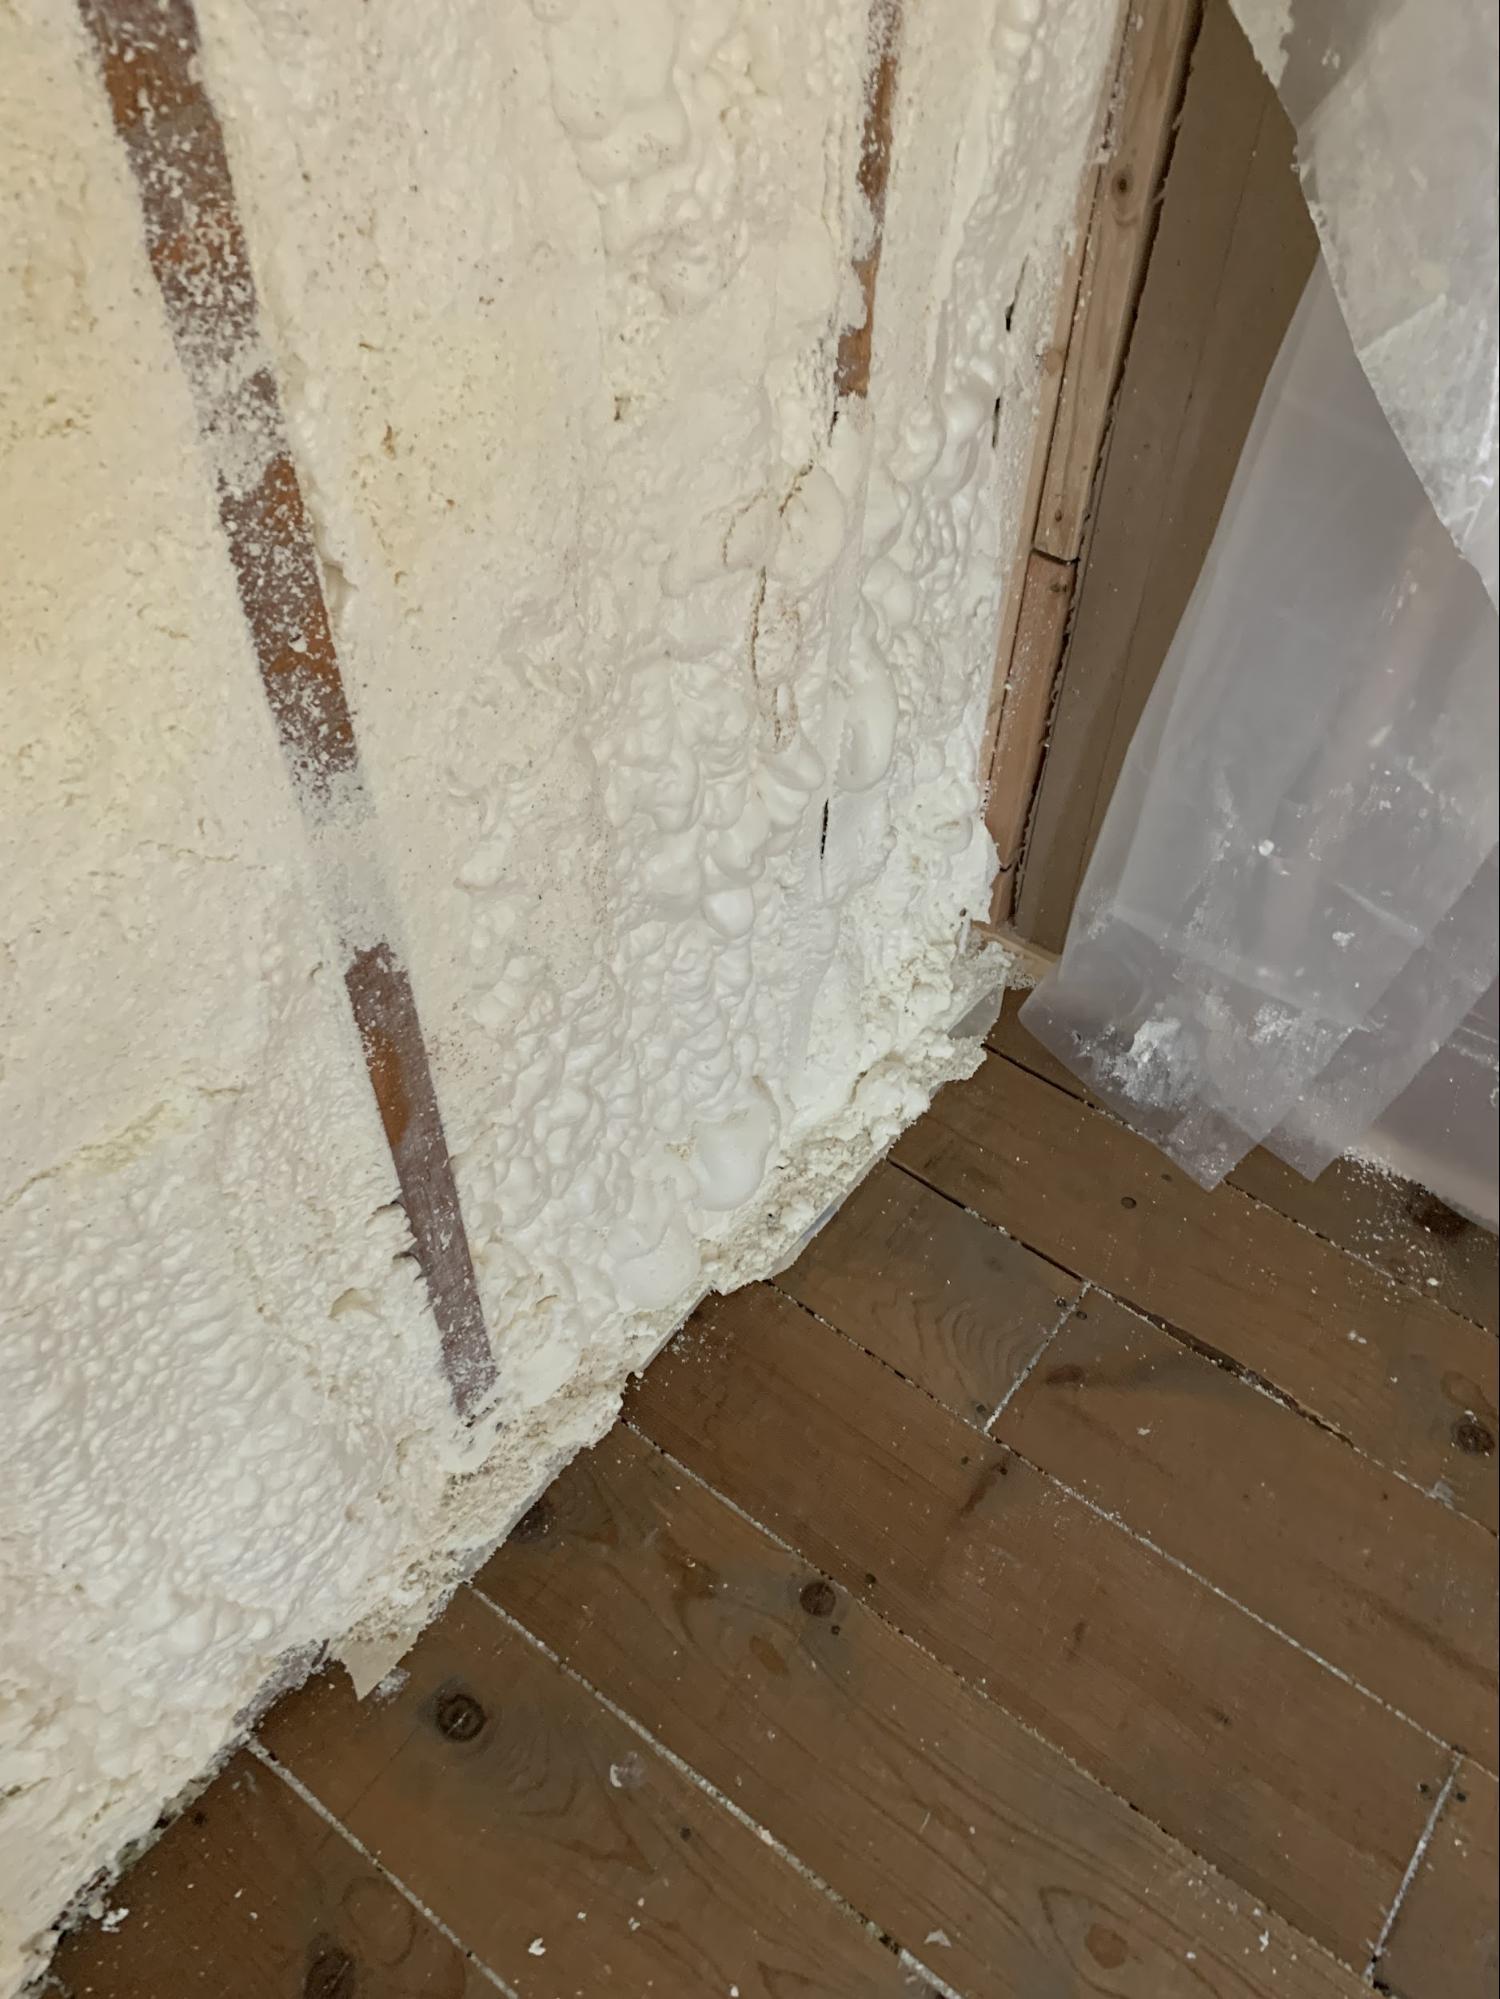 Spray foam insulation applied to basement wall cavities 